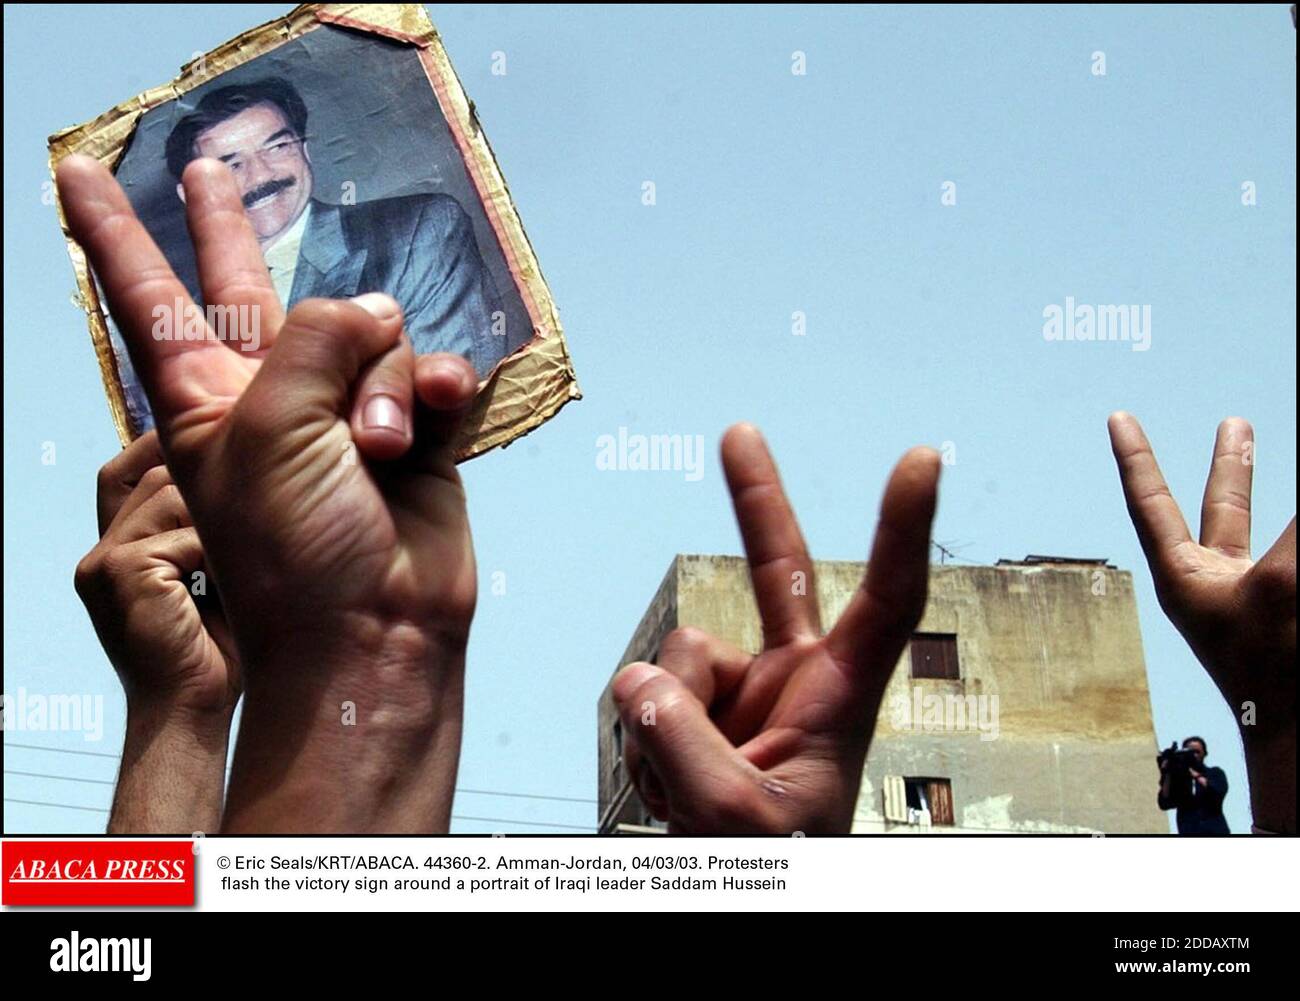 NO FILM, NO VIDEO, NO DOCUMENTARY - © Eric Seals/KRT/ABACA. 44360-2. Amman-Jordan, 04/03/03. Protesters flash the victory sign around a portrait of Iraqi leader Saddam Hussein Stock Photo - Alamy